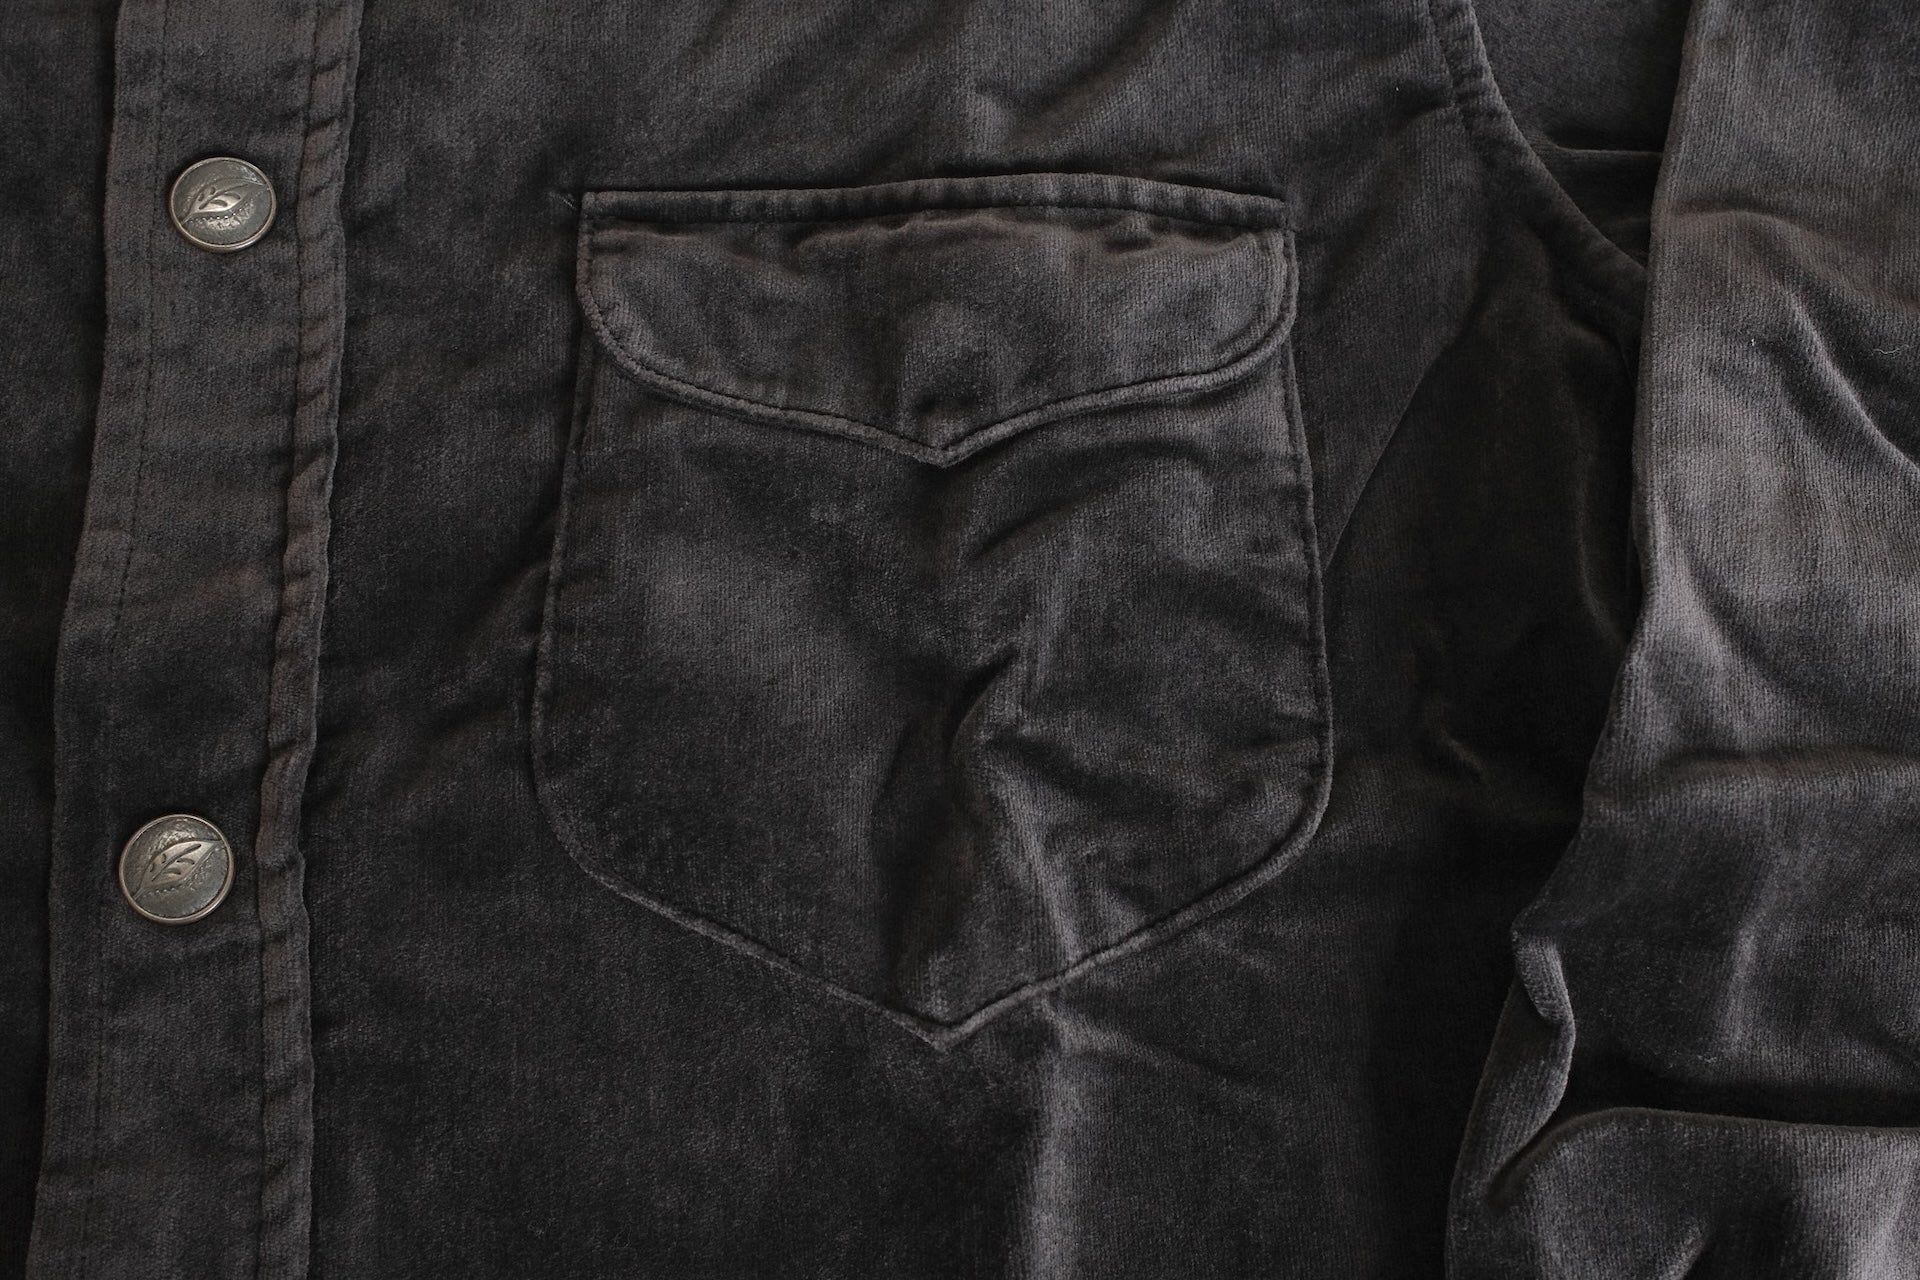 Pure Blue Japan Cotton Velvet C.P.O Jacketed Shirt (Black)